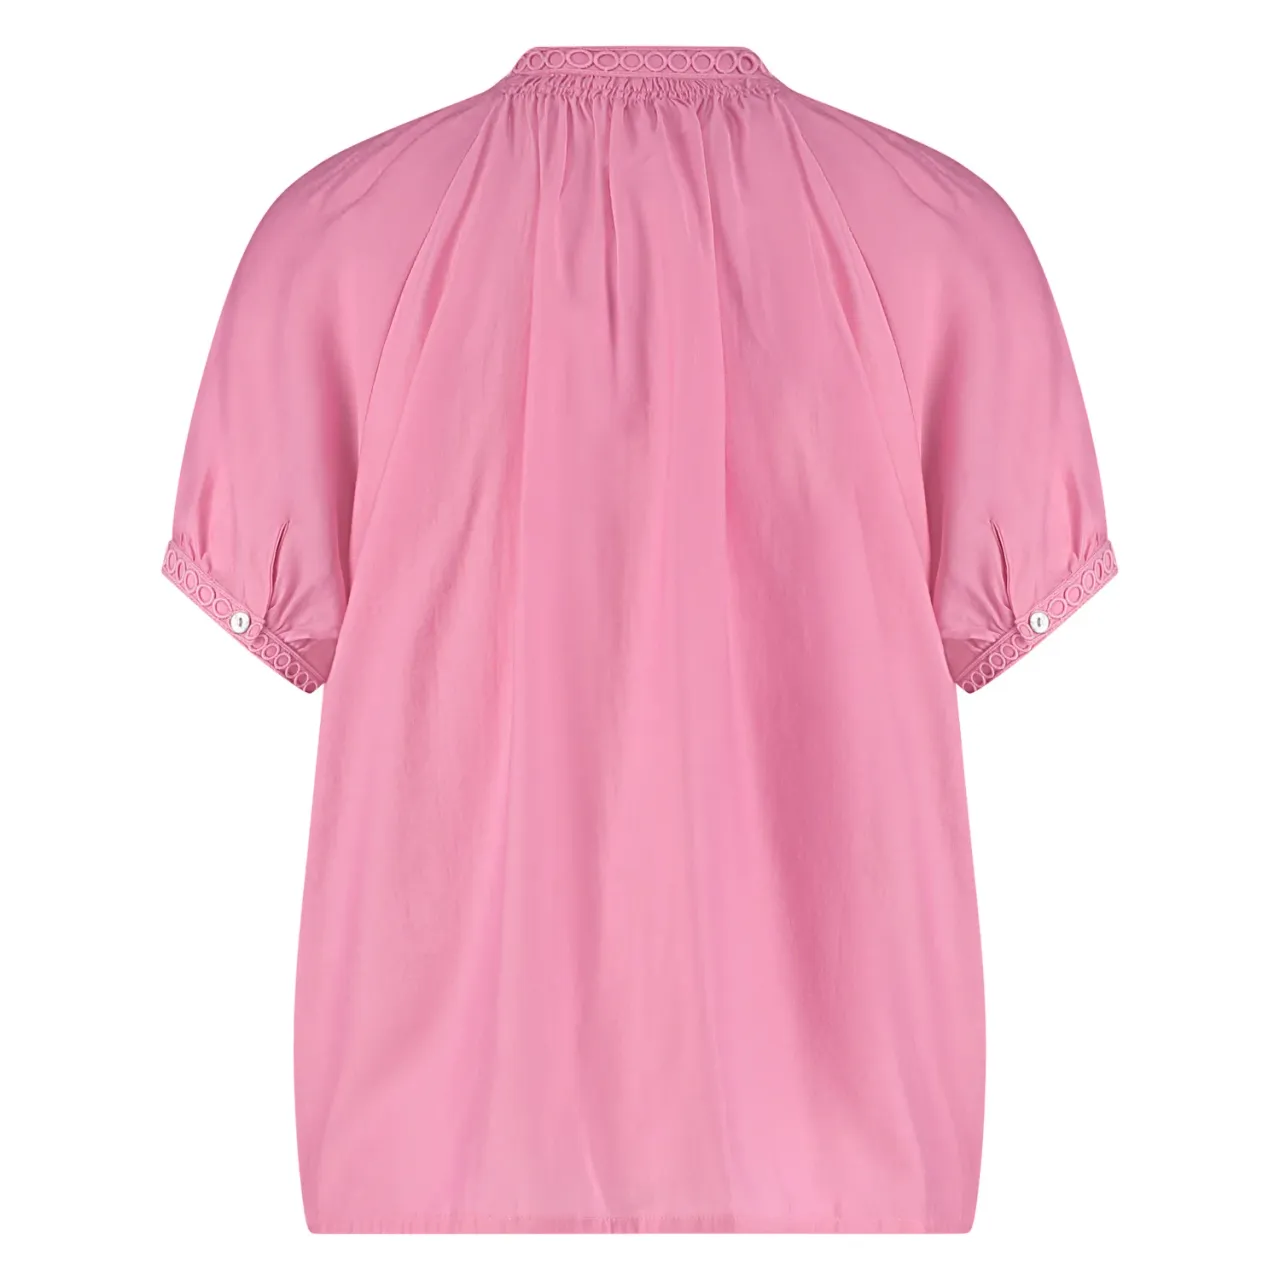 Nukus Ss2404943 alaina blouse pink